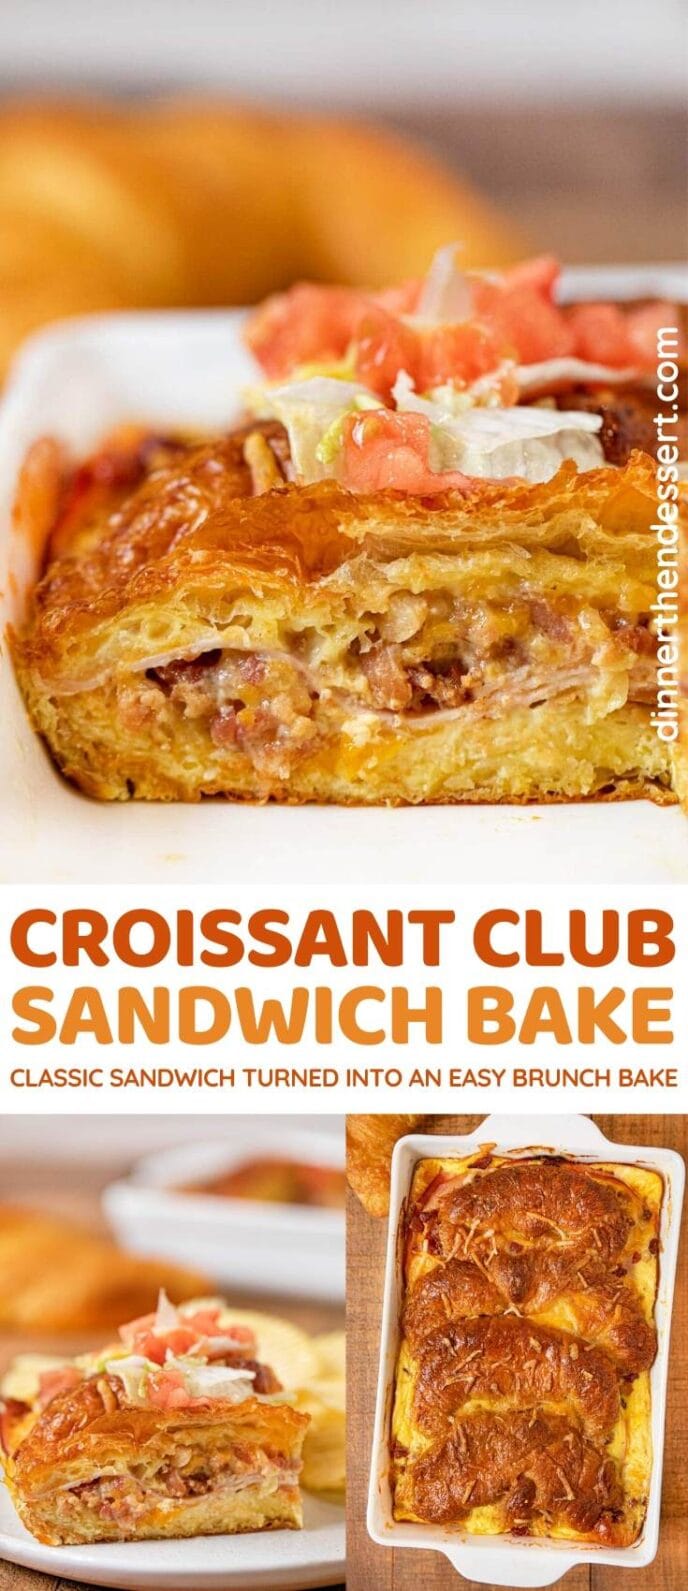 Croissant Club Sandwich Bake collage